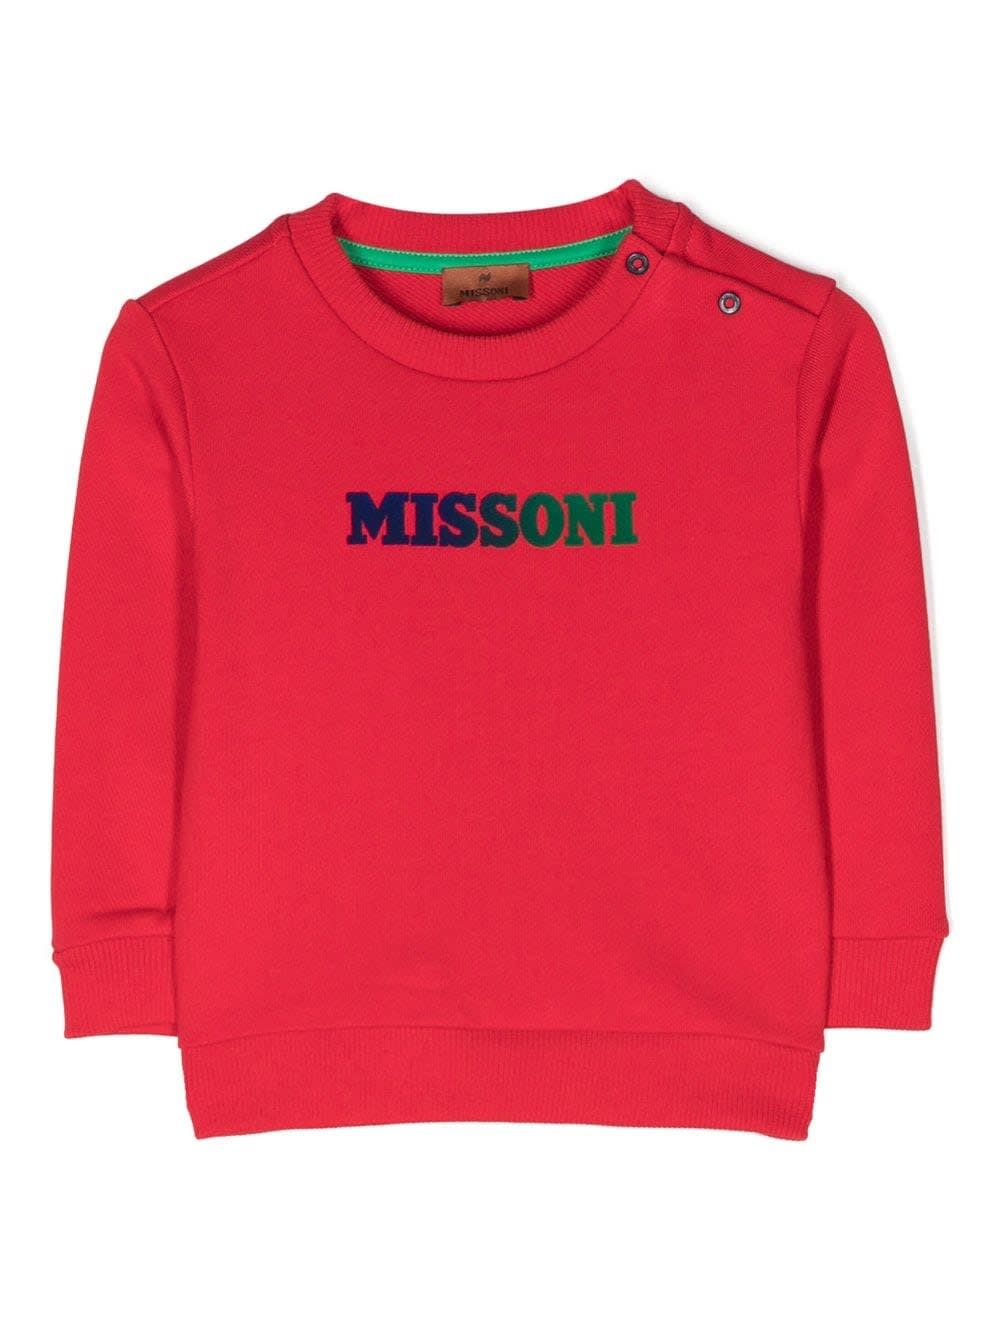 Missoni Babies' Sweatshirt With Print In Red